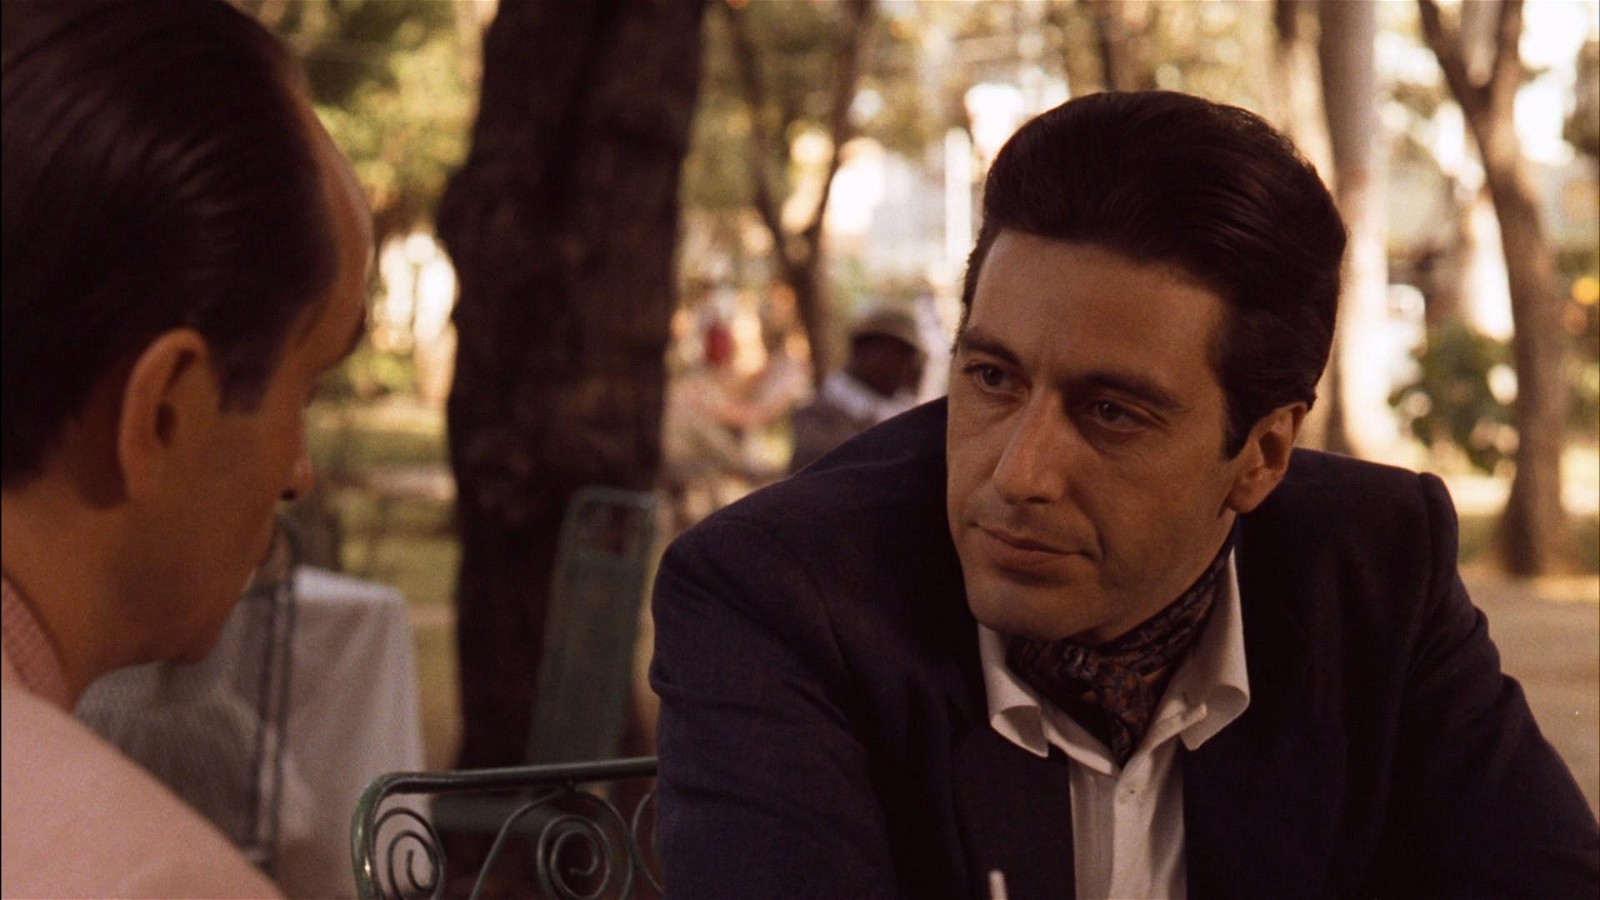 Al Pacino in The Godfather Part II